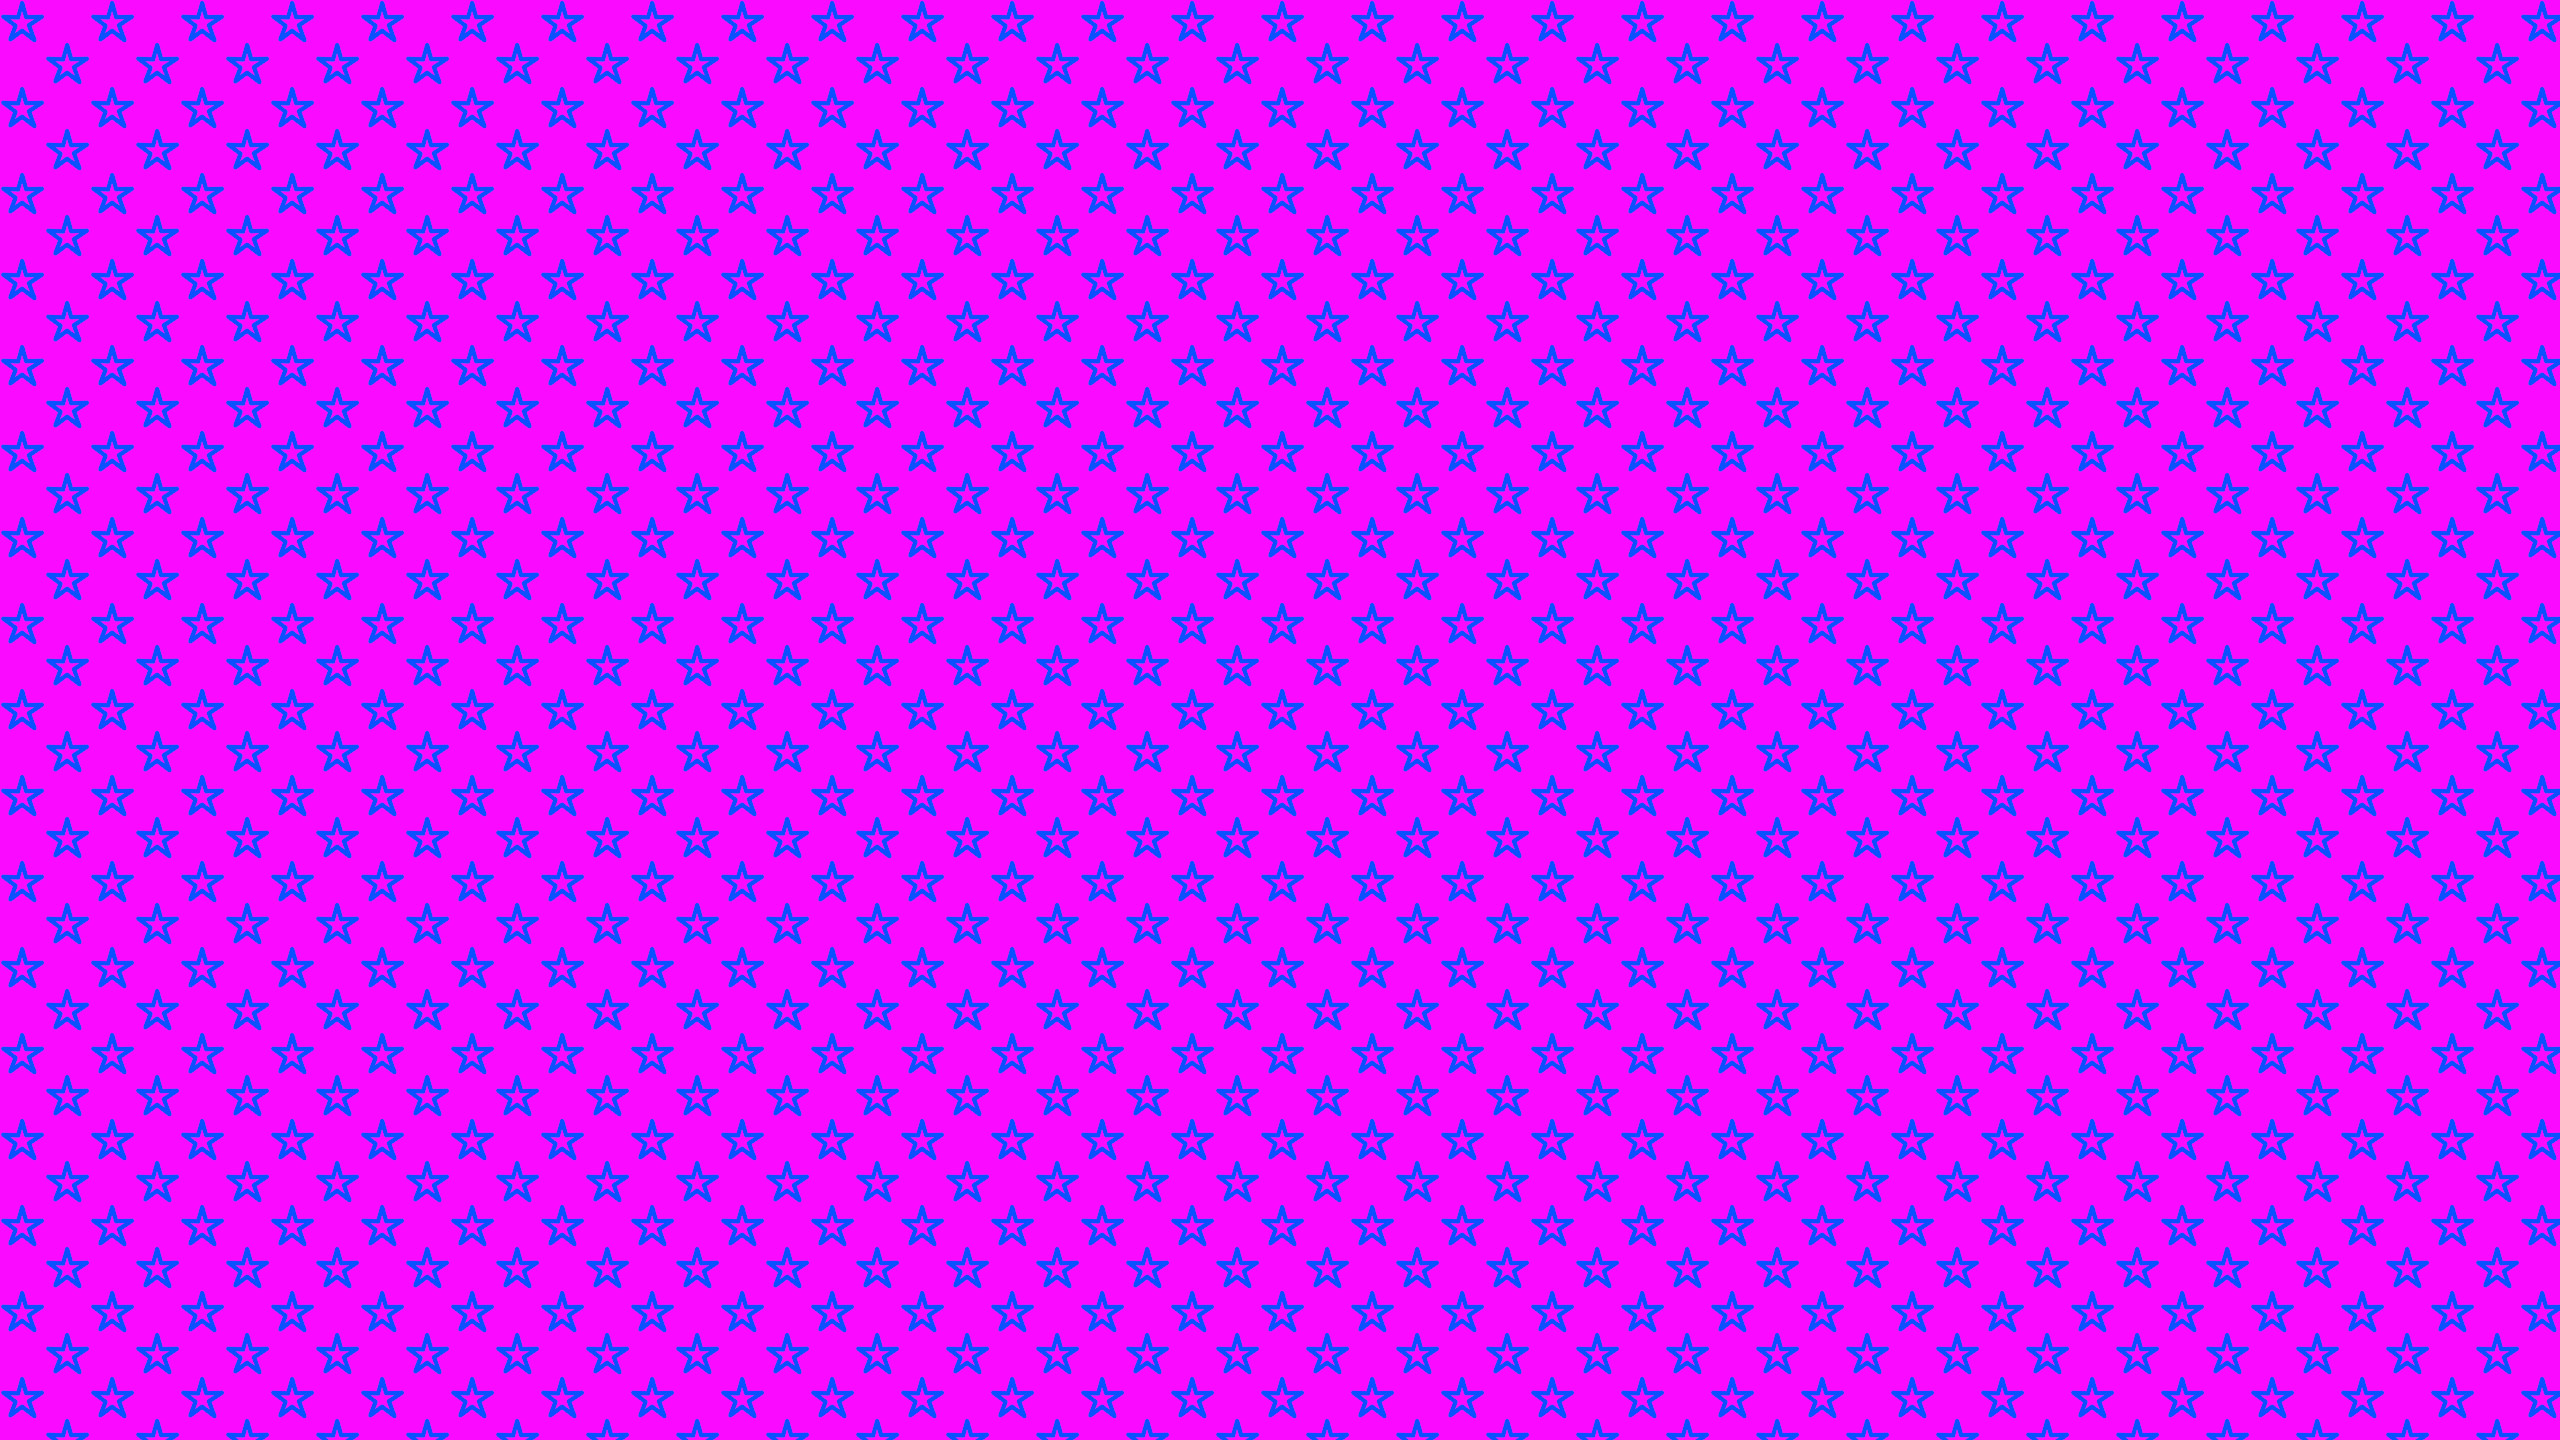 2560x1440 Purple pink wallpaper wallpapersafari Pink and purple wallpaper